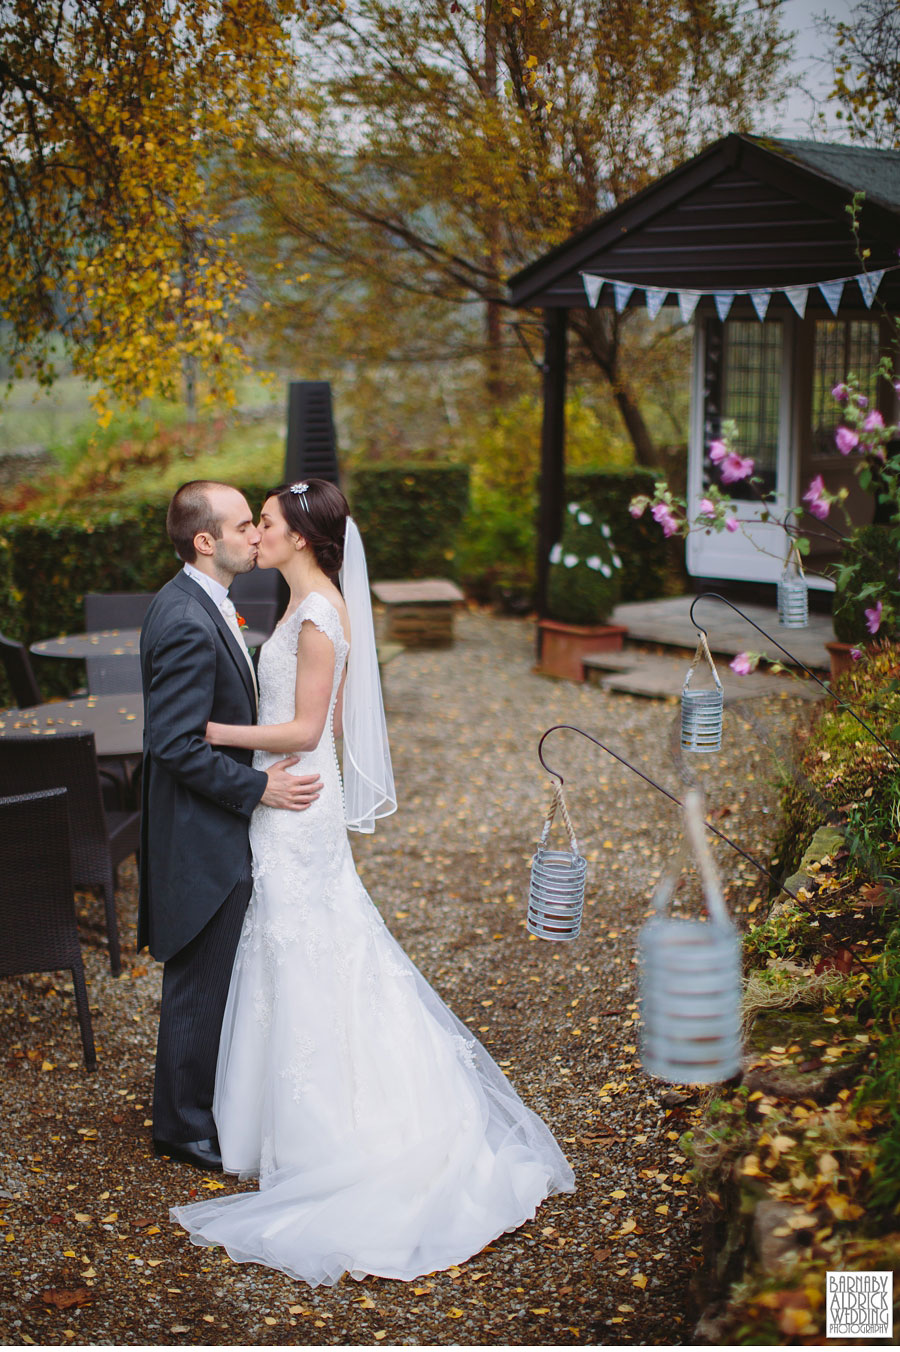 Devonshire Fell Wedding Photography - Sharon & Greg